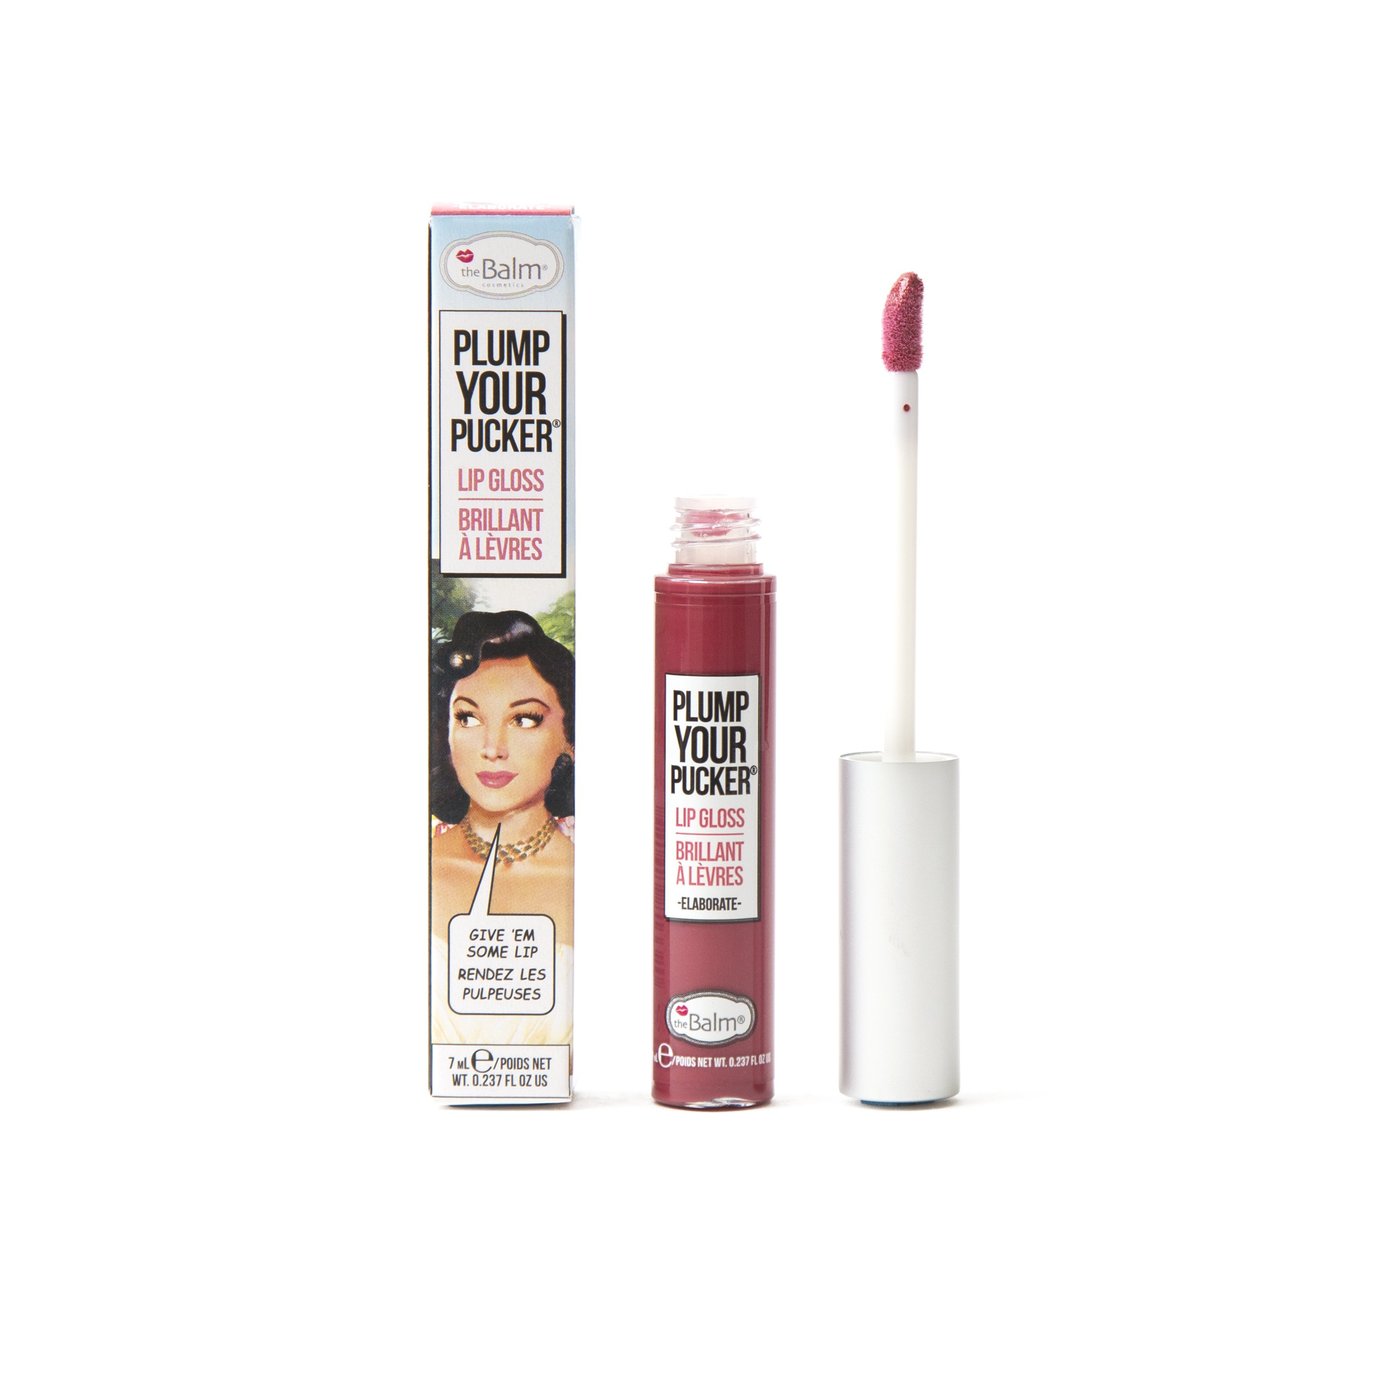 theBalm cosmetics PLUMP YOUR PUCKER® Lip Gloss Elaborate - opaque warm rose